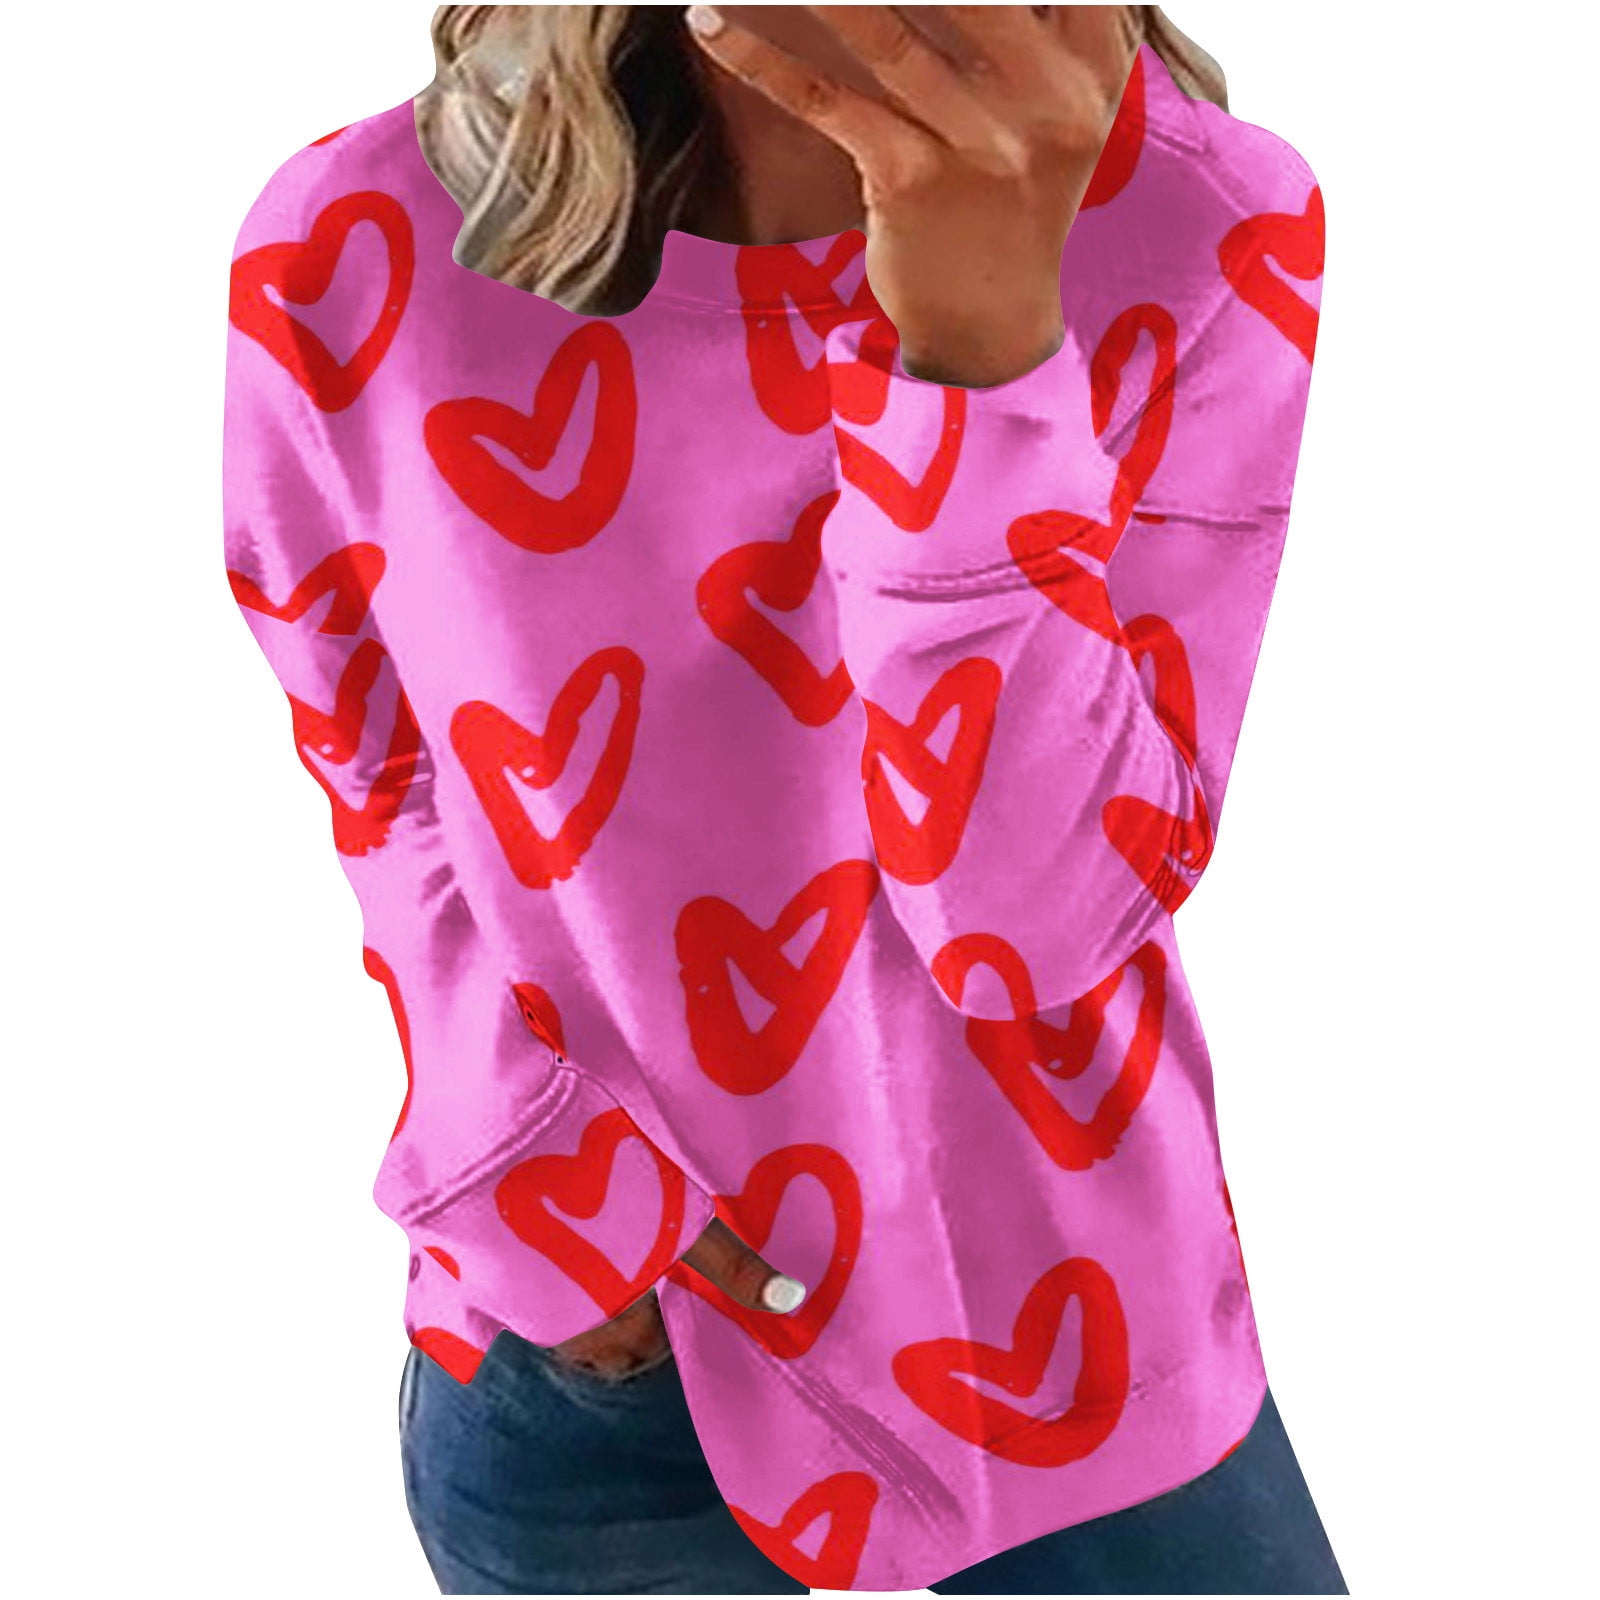 VKEKIEO Valentines Day Gifts Valentine's Day Women's Sweater Loose ...